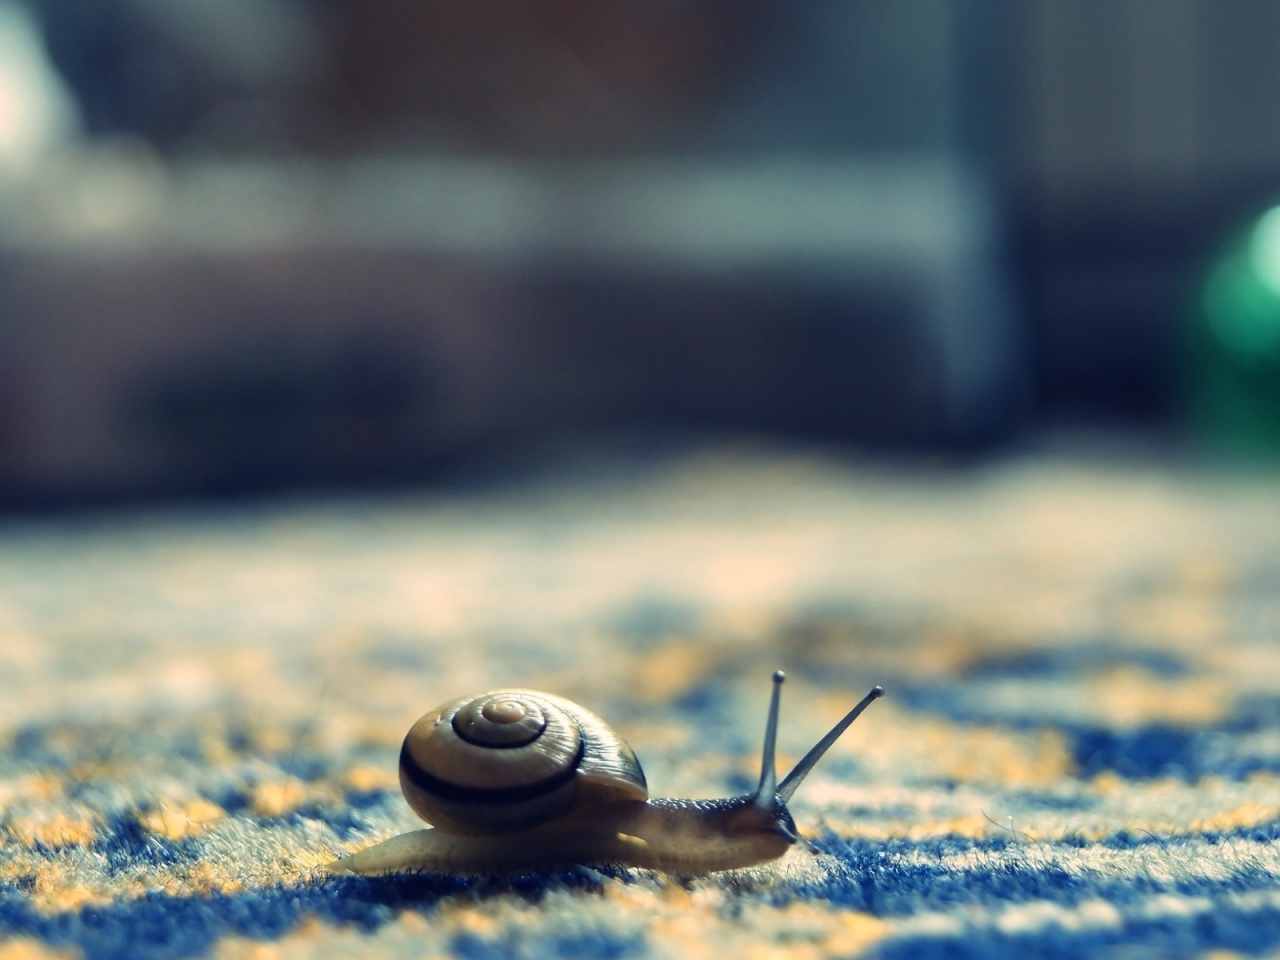 Little Snail for 1280 x 960 resolution